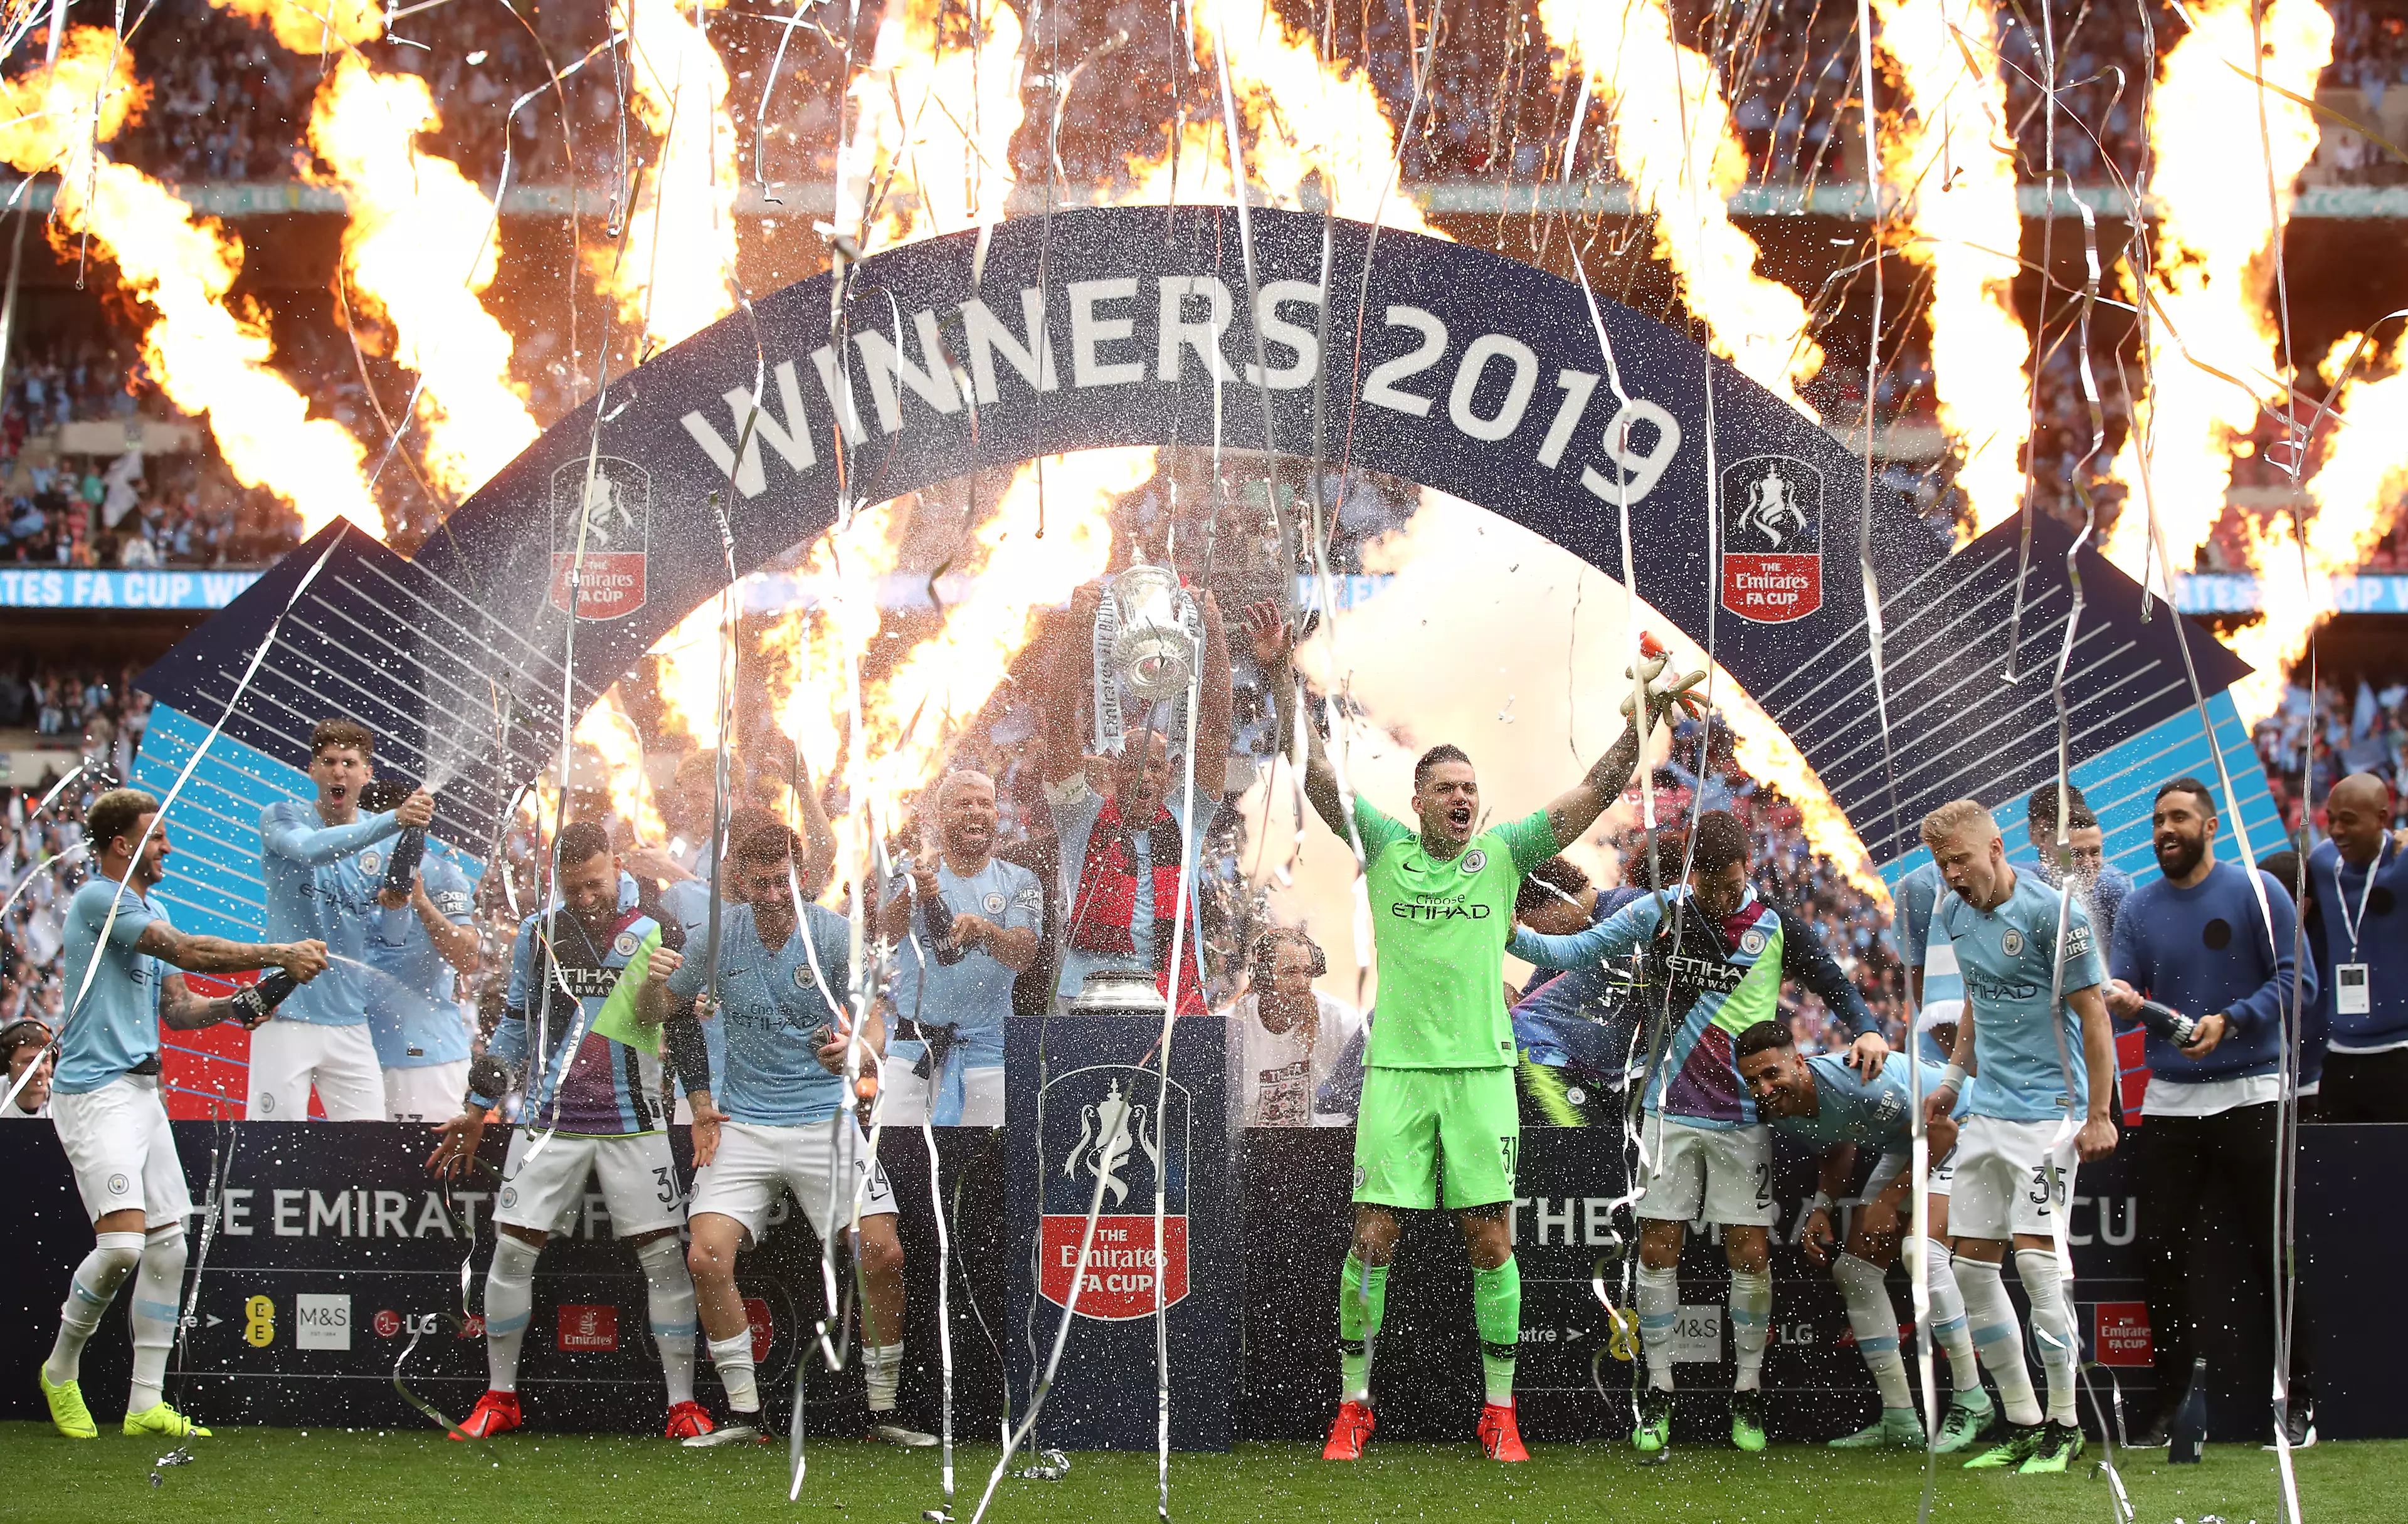 Manchester City won last season's FA Cup. Image: PA Images